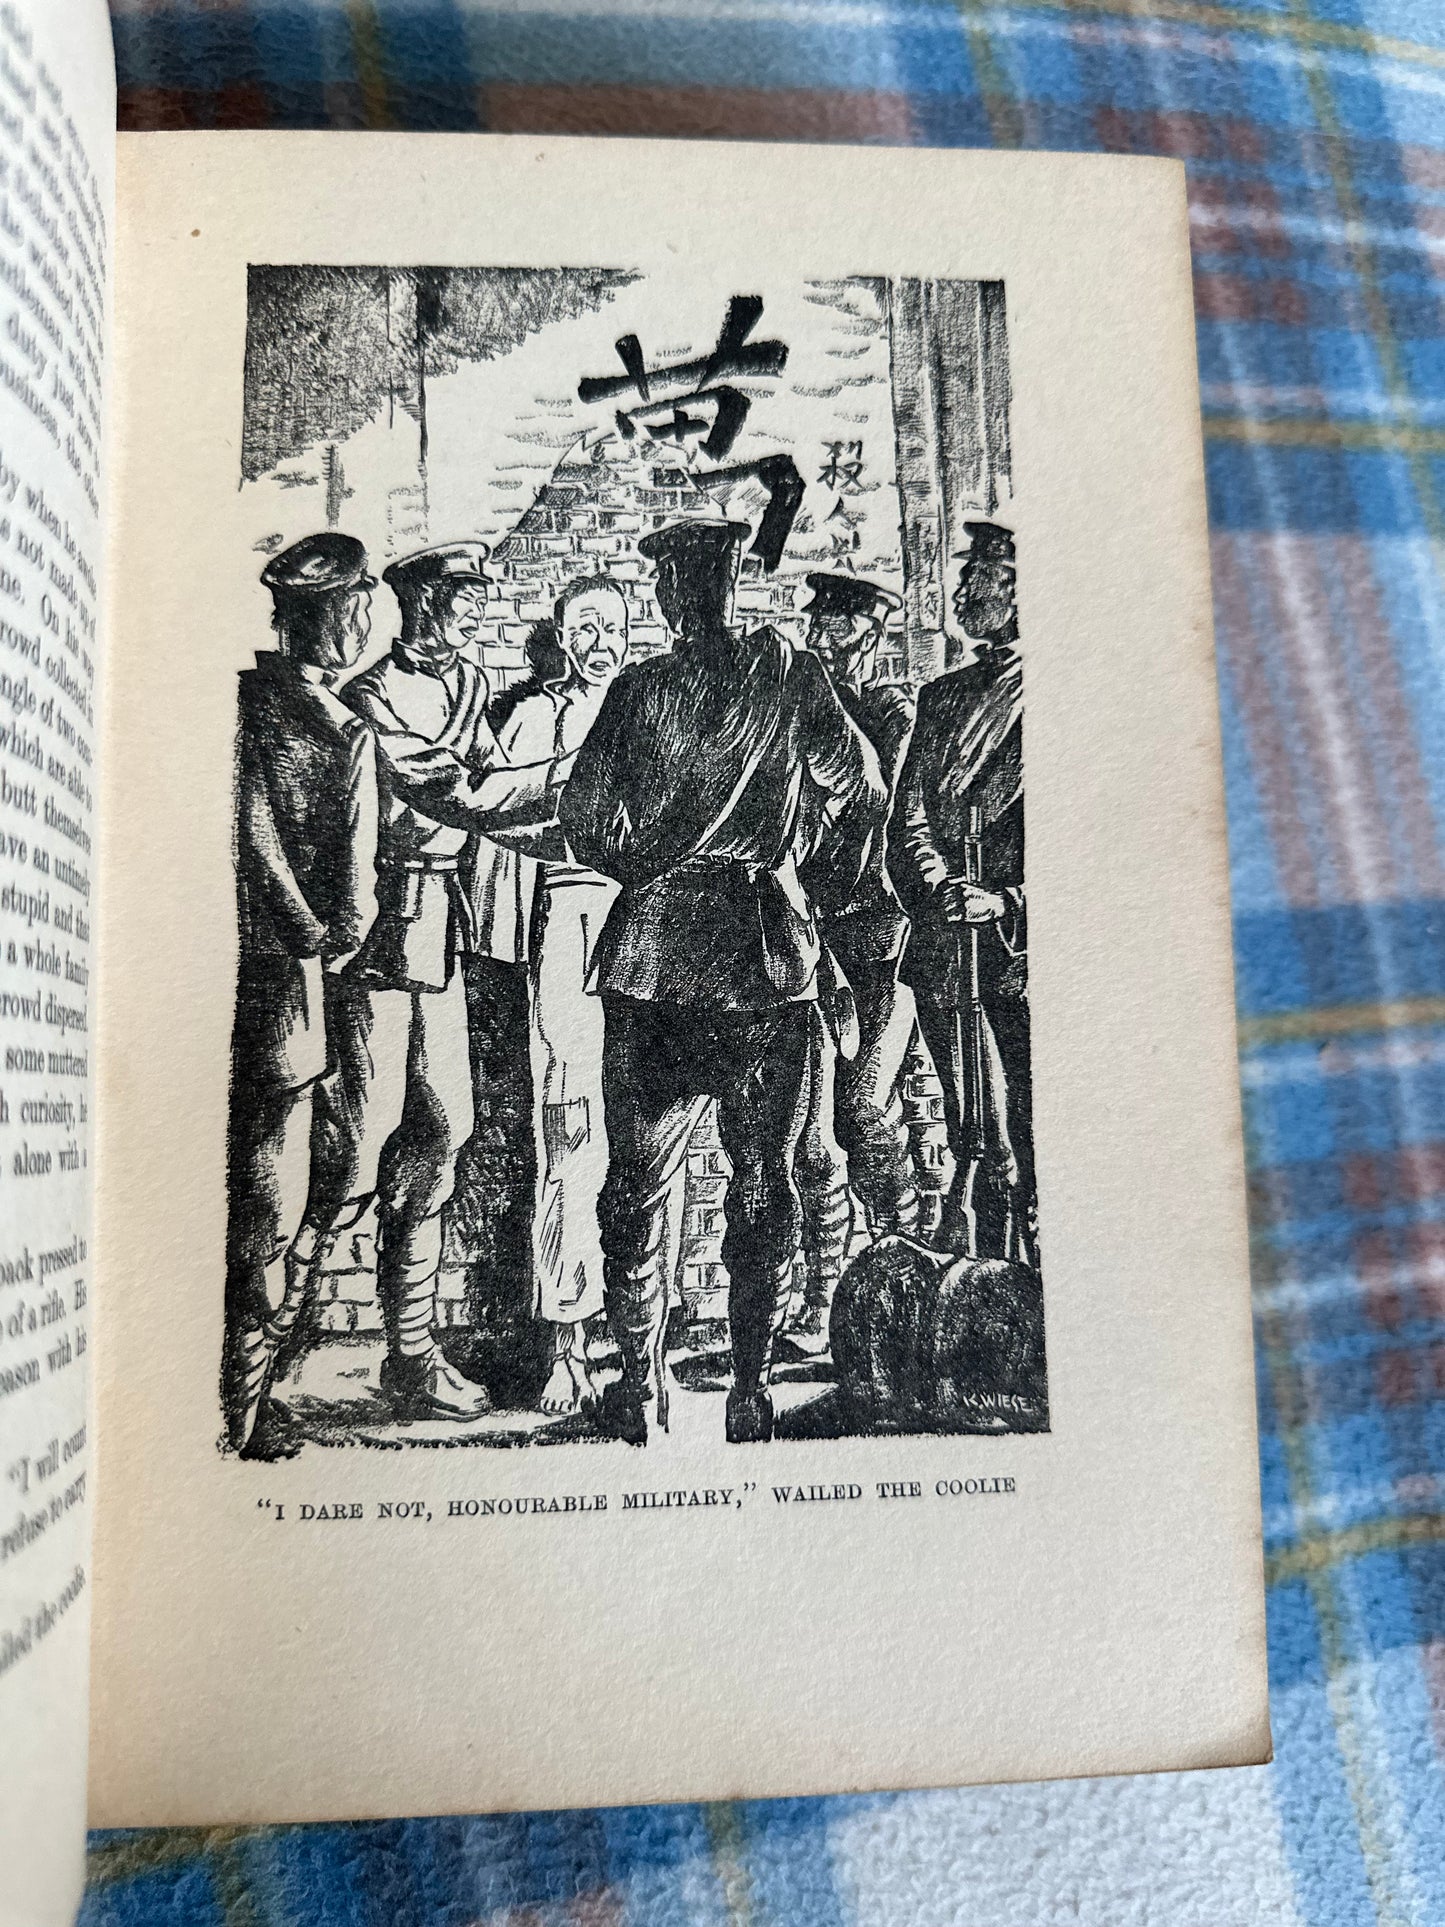 1934 Young Fu Of The Upper Yangtze - Elizabeth Foreman Lewis(Kurt Wiese illustrated) George G. Harrap & Co Ltd